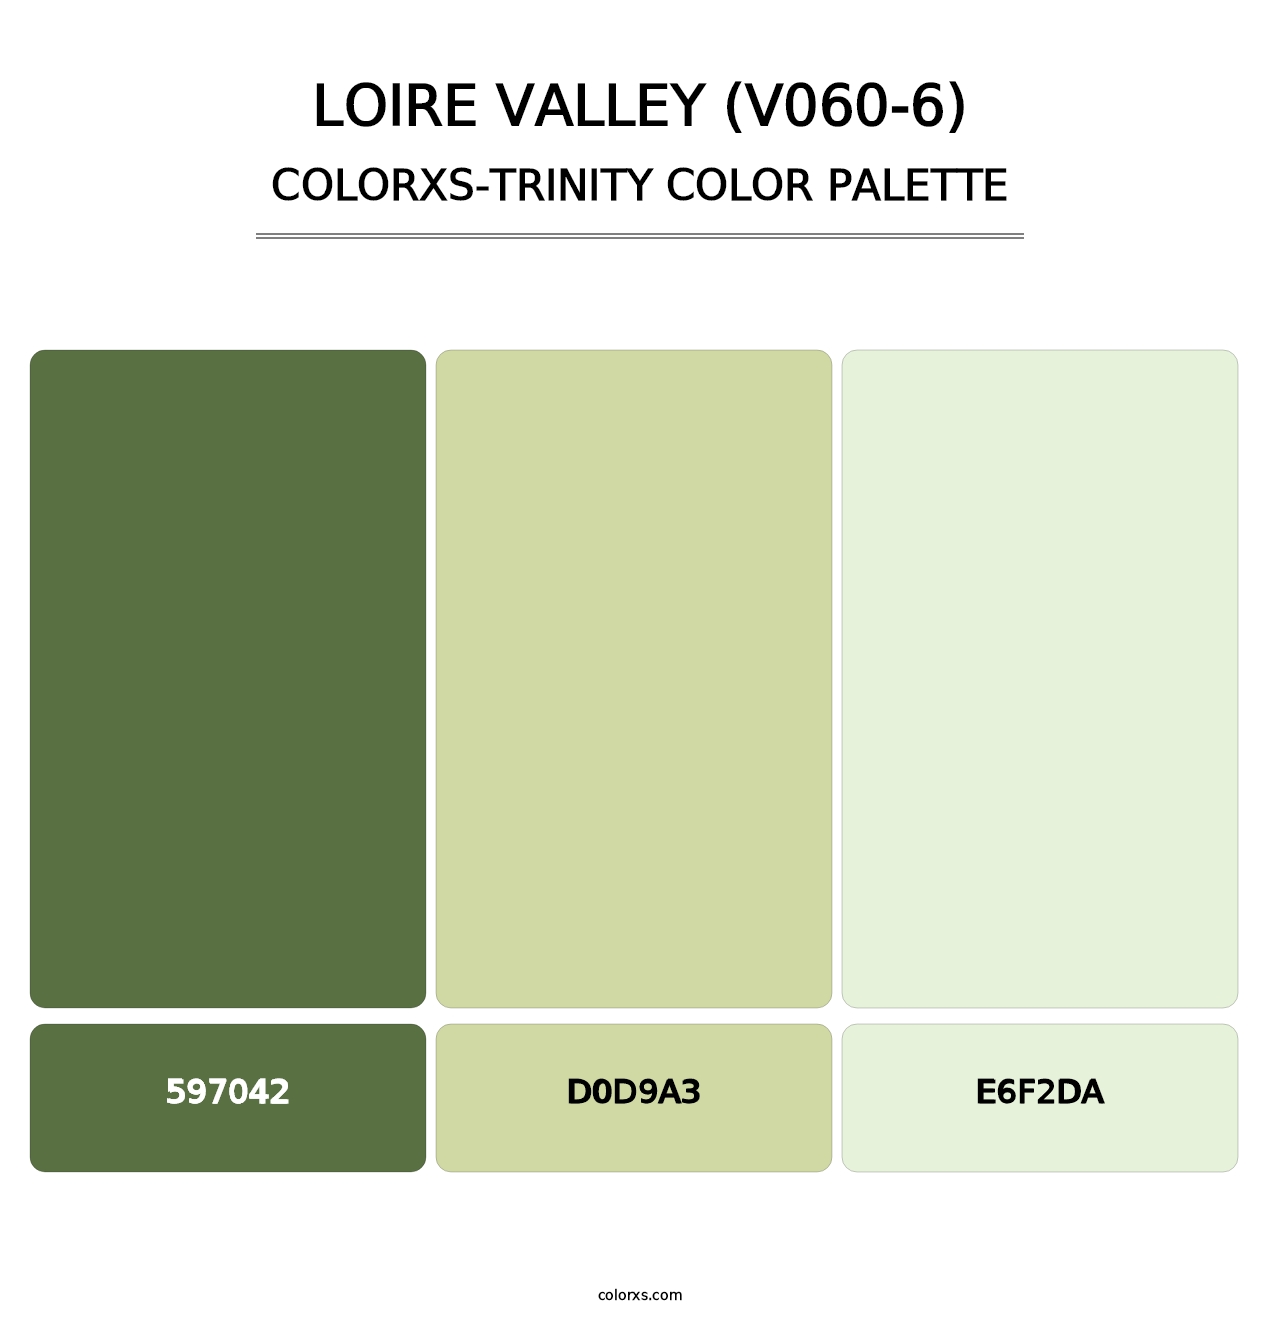 Loire Valley (V060-6) - Colorxs Trinity Palette